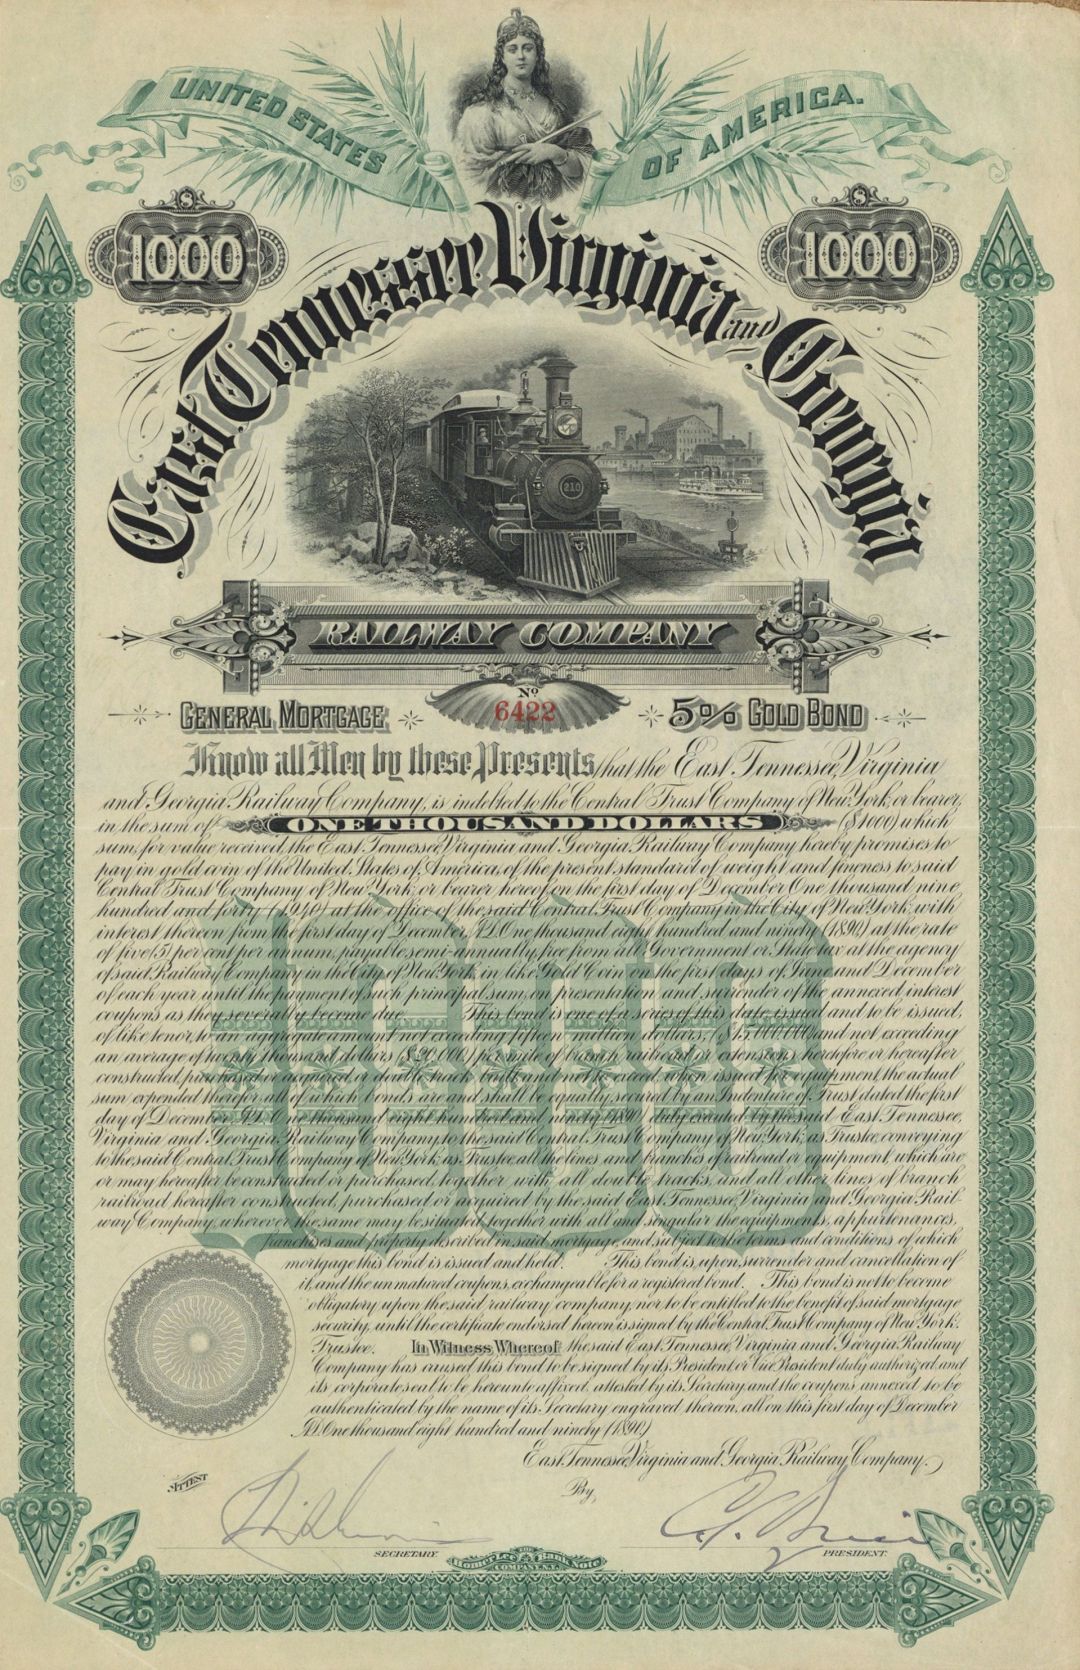 East Tennesse, Virginia and Georgia Railway - $1,000 Bond (Uncanceled)